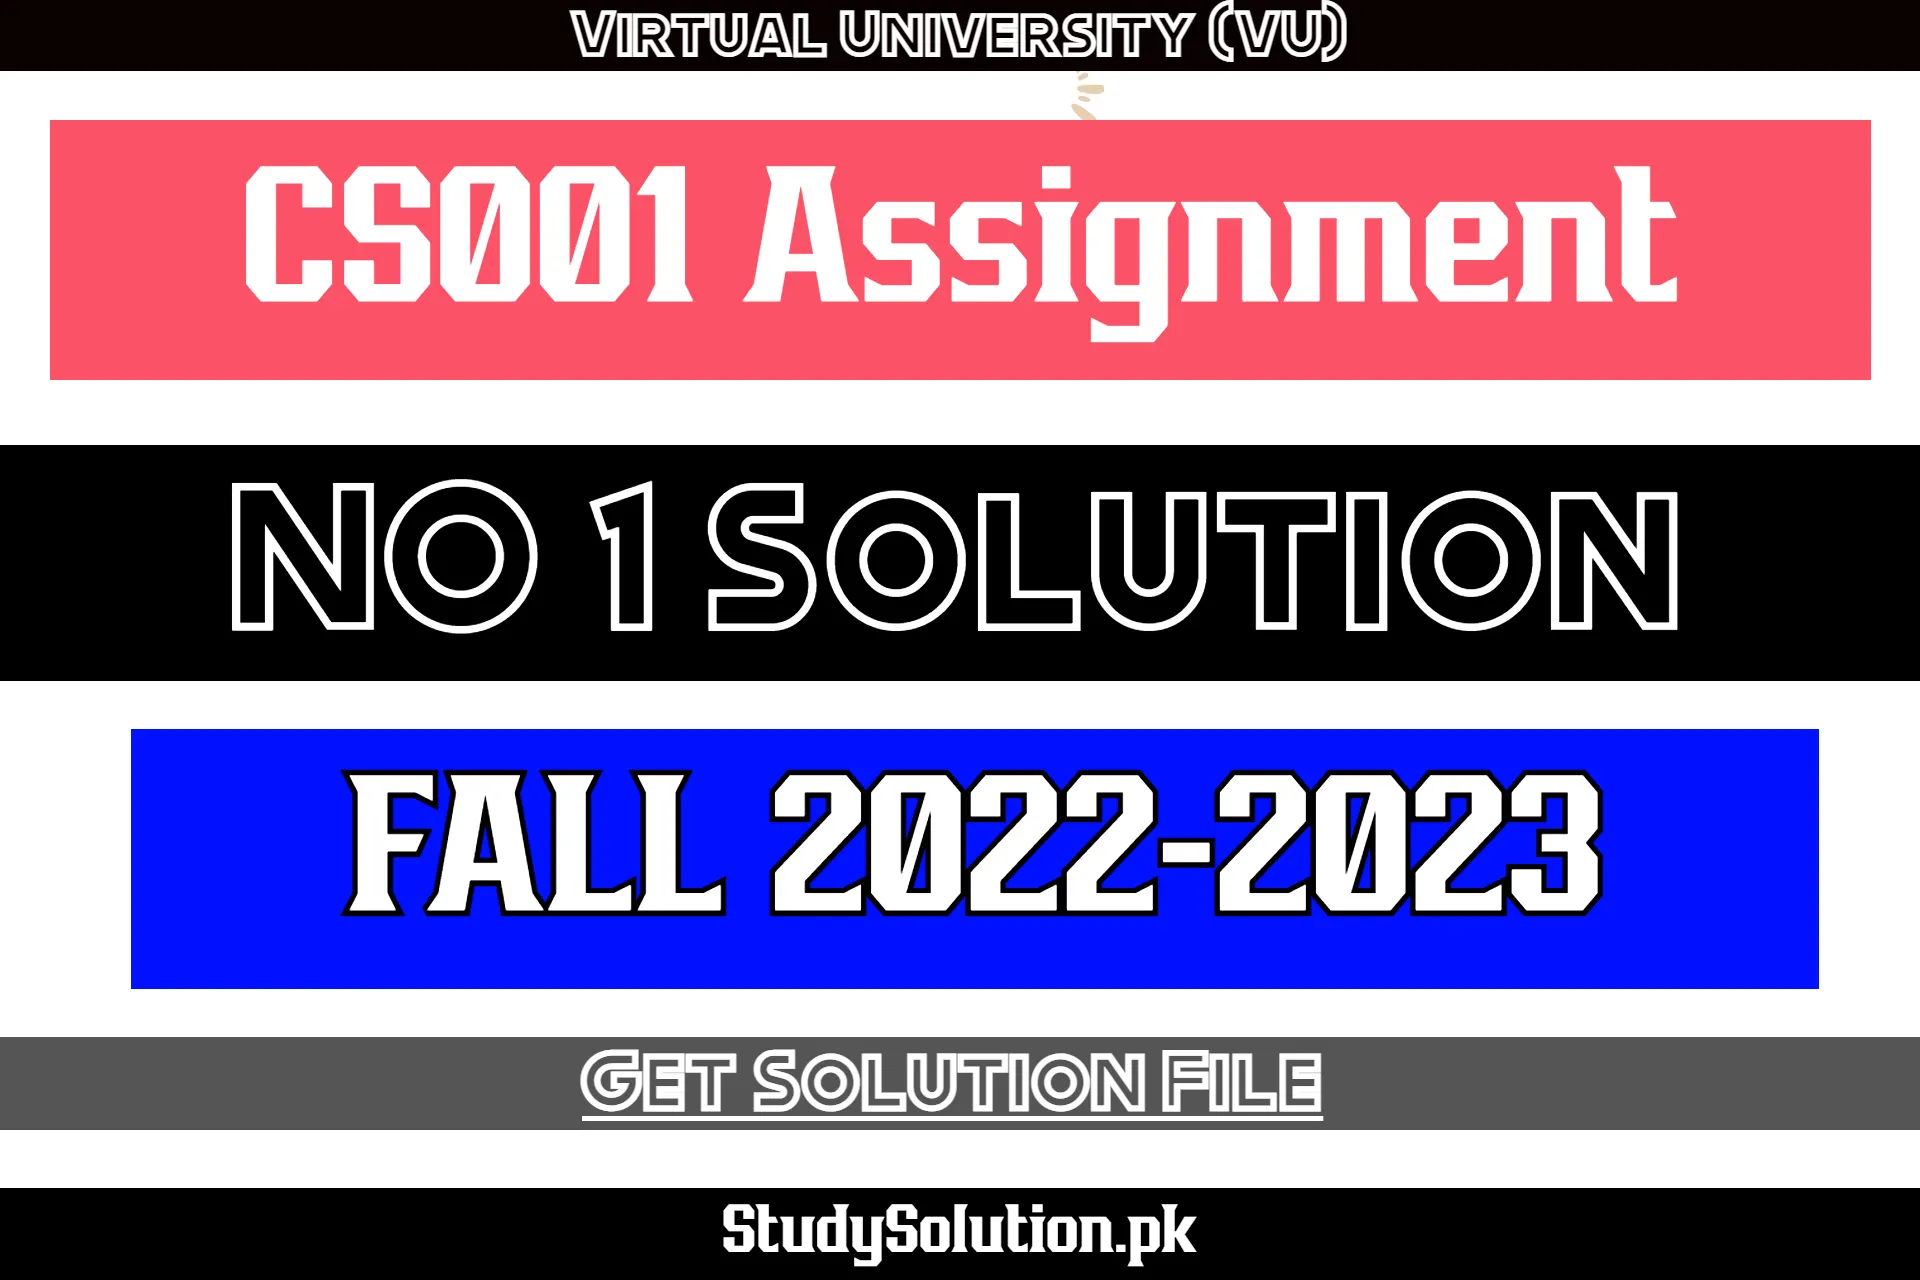 CS001 Assignment No 1 Solution Fall 2022